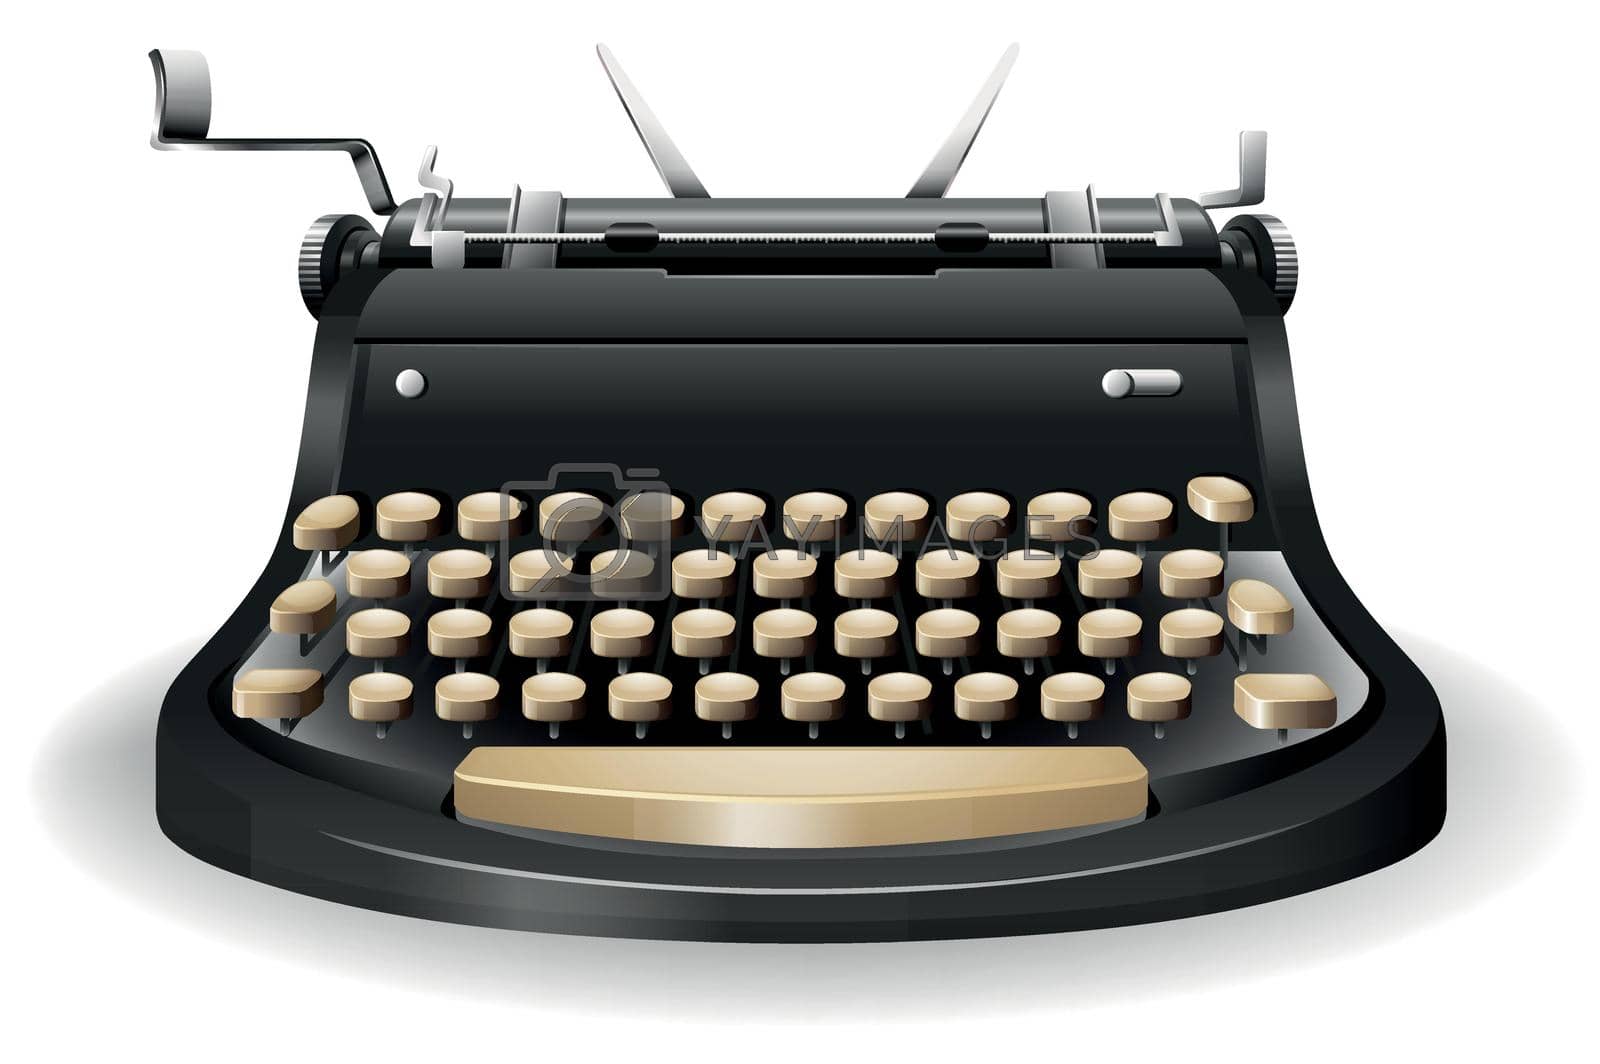 Royalty free image of Typewriter by iimages